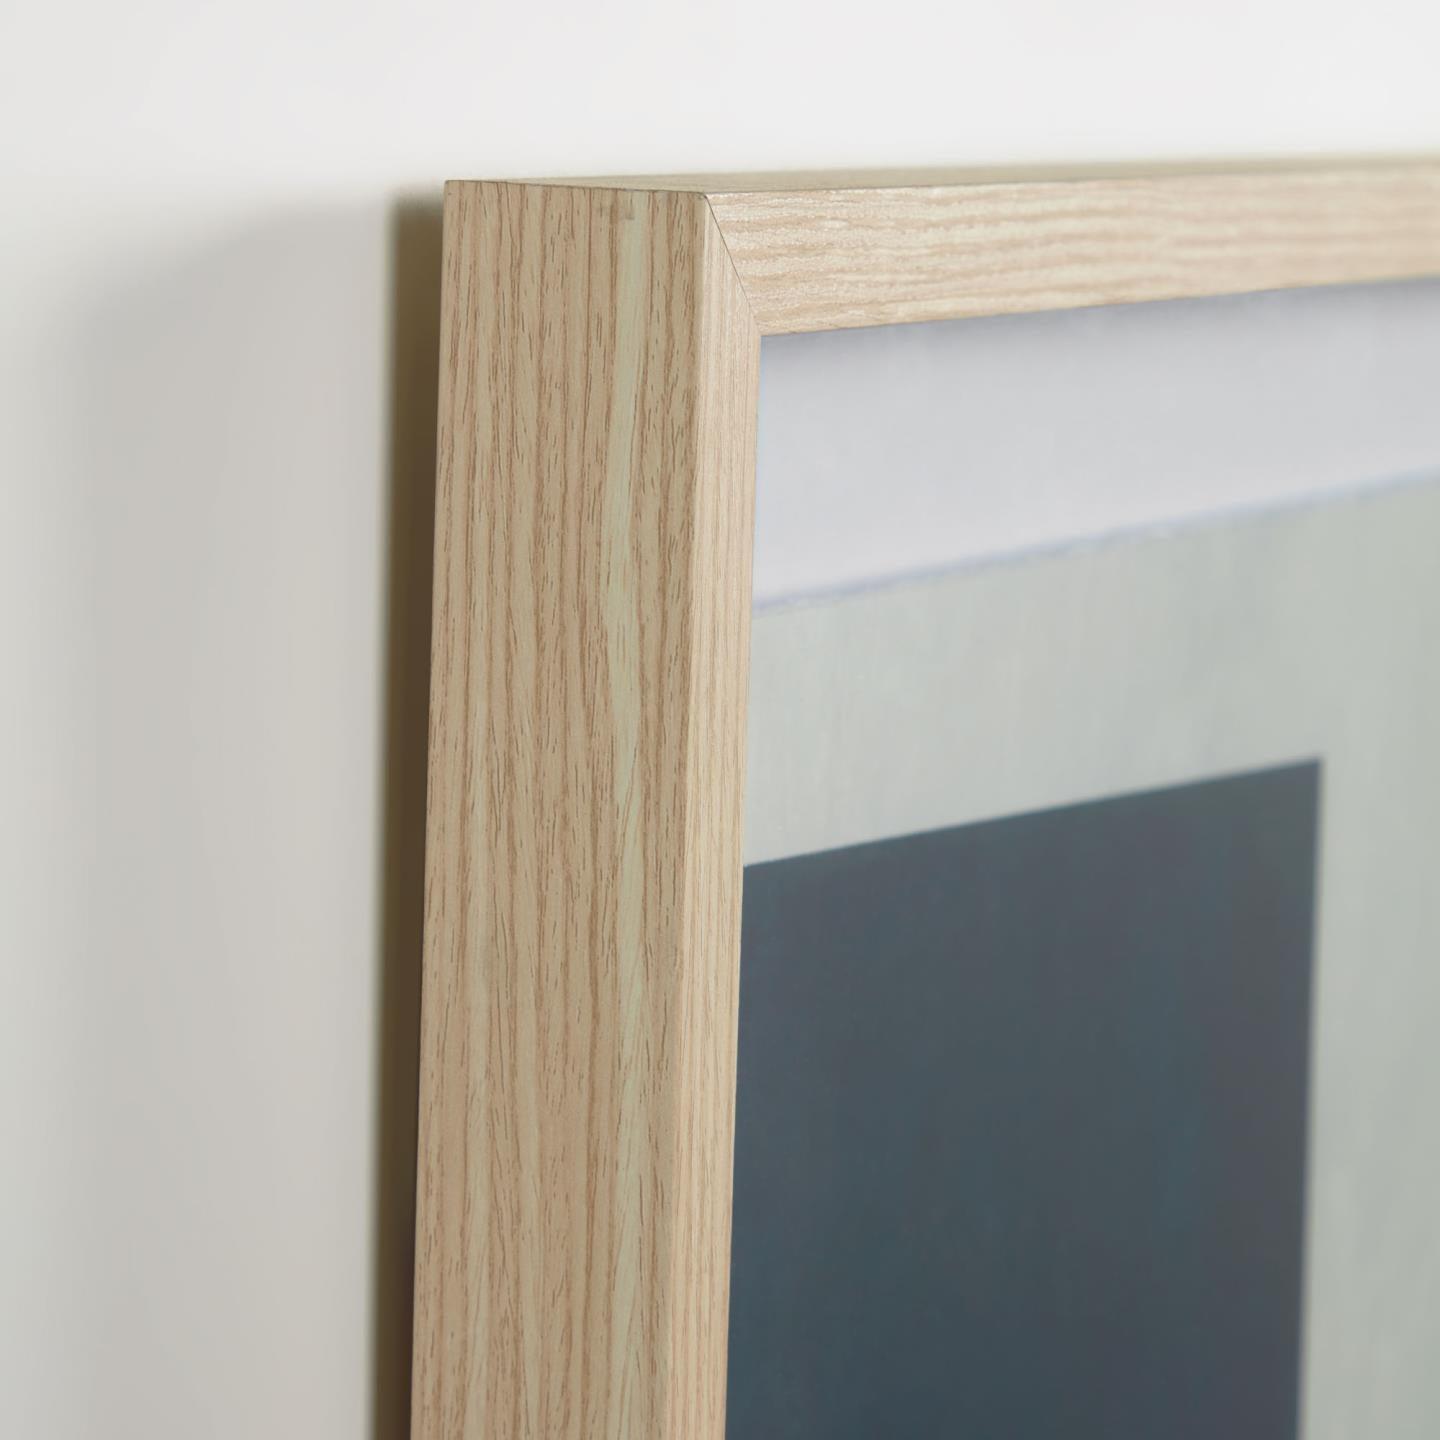 Paper W/Wood Frame